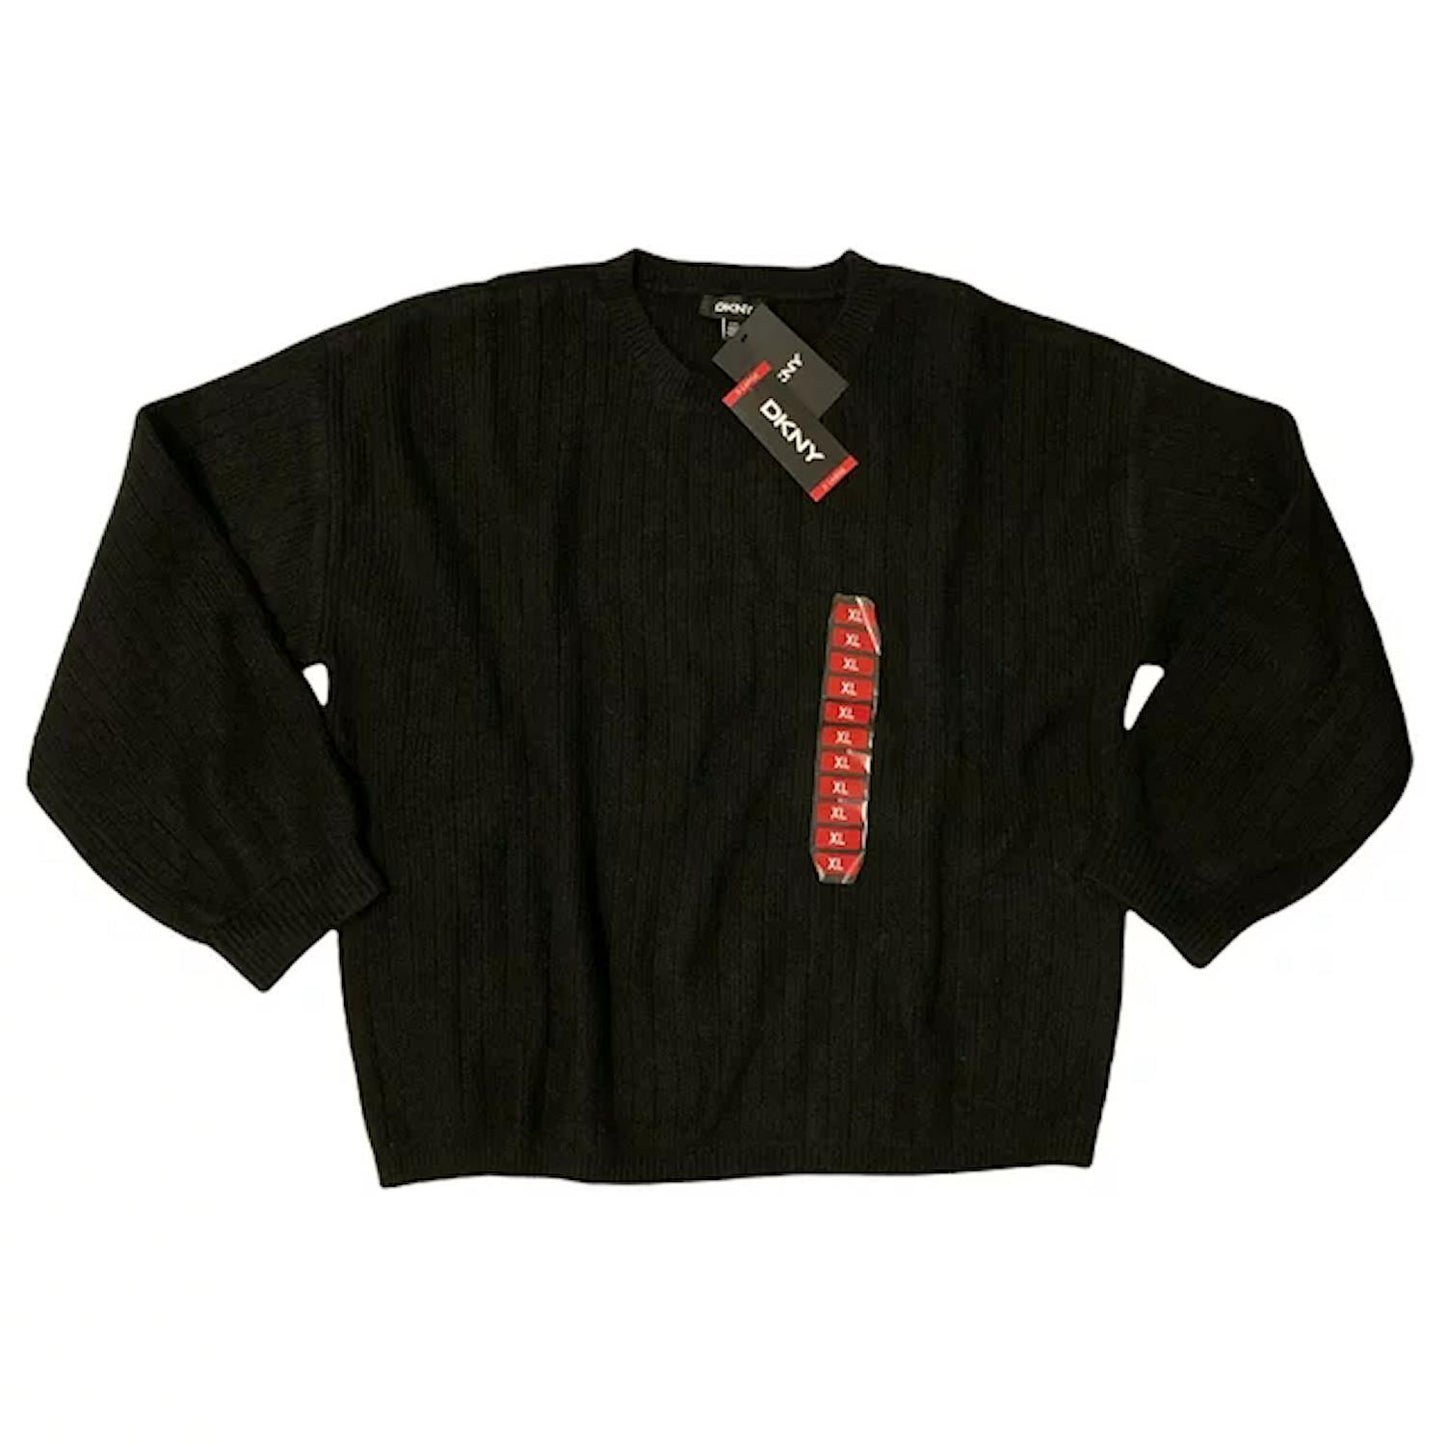 DKNY Women's Cashmere Blend Crew Neck Sweater